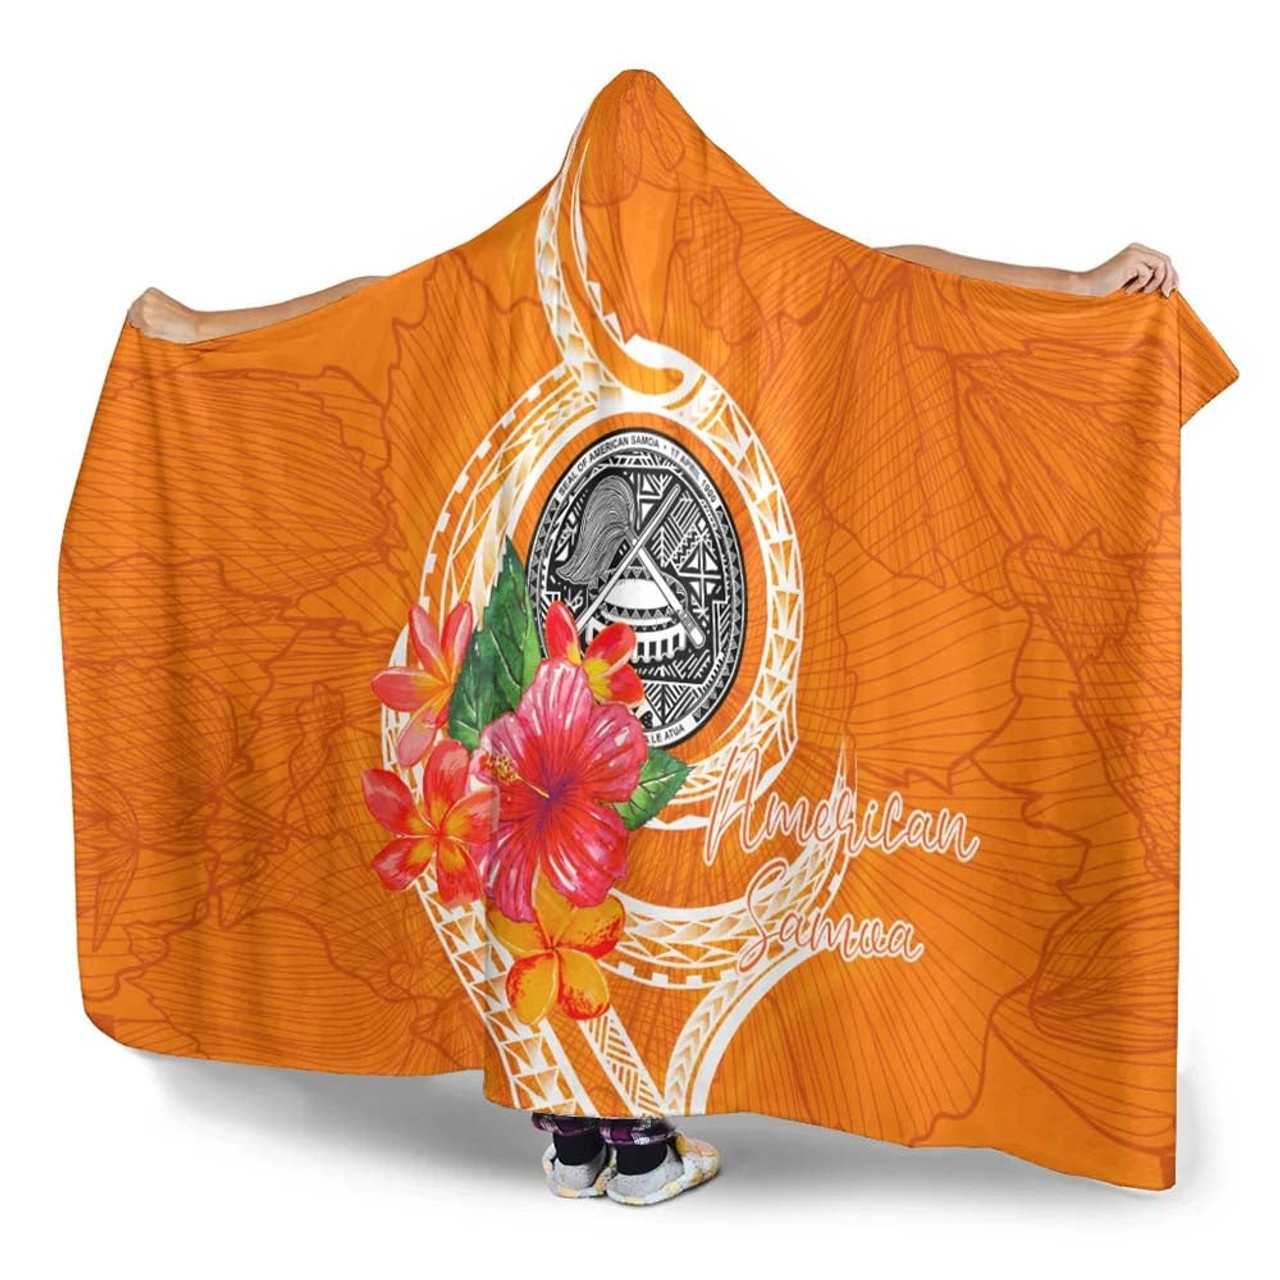 American Samoa Polynesian Hooded Blanket - Orange Floral With Seal 4